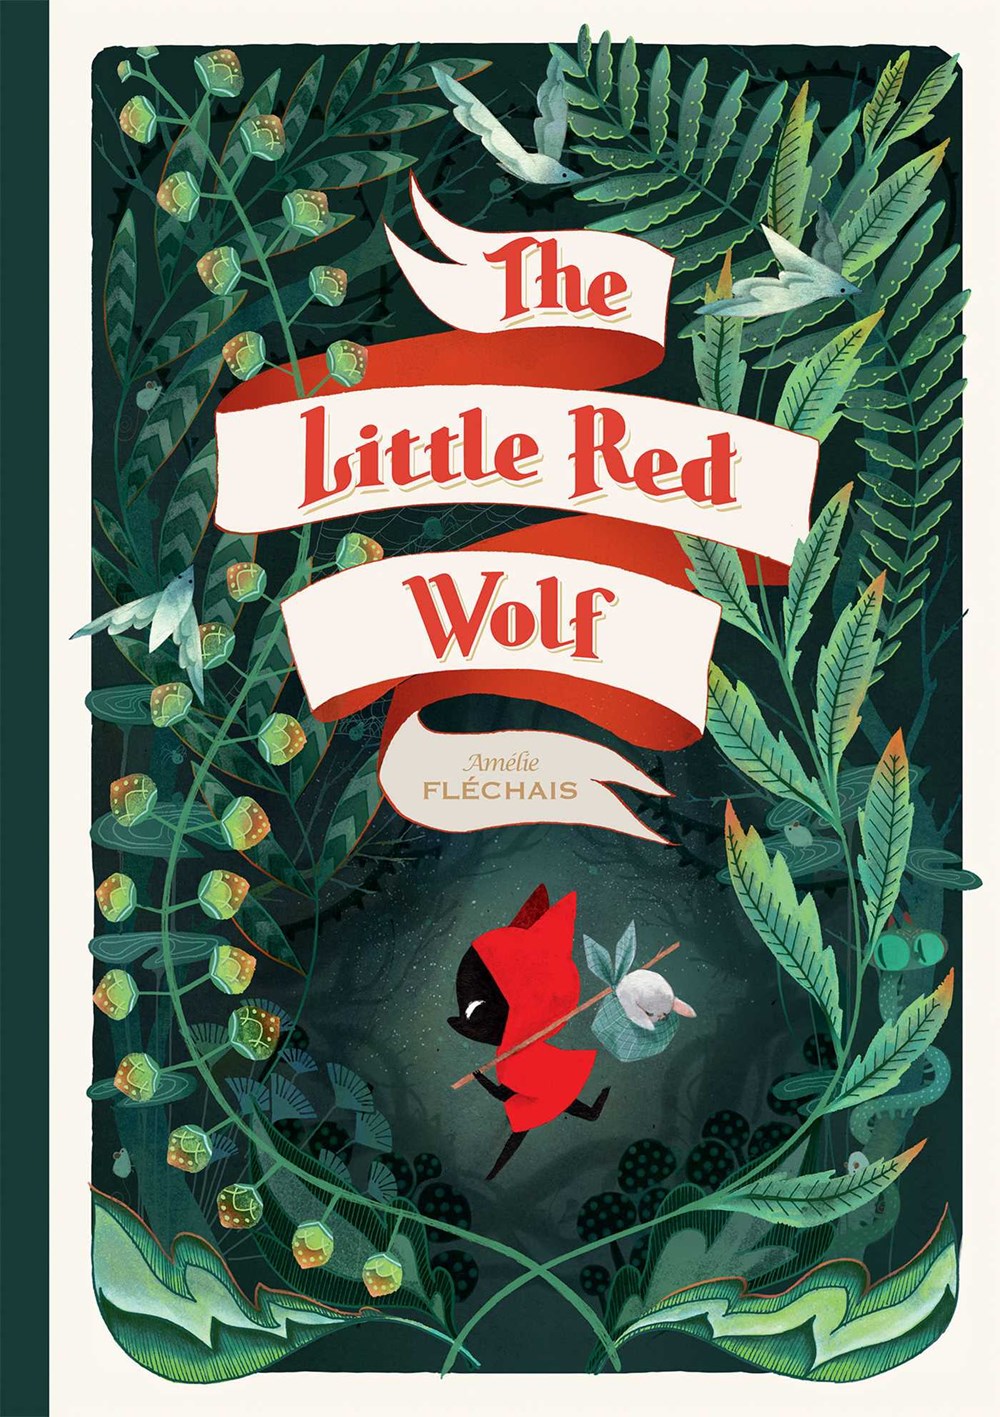 The Little Red Wolf by Amélie Fléchais